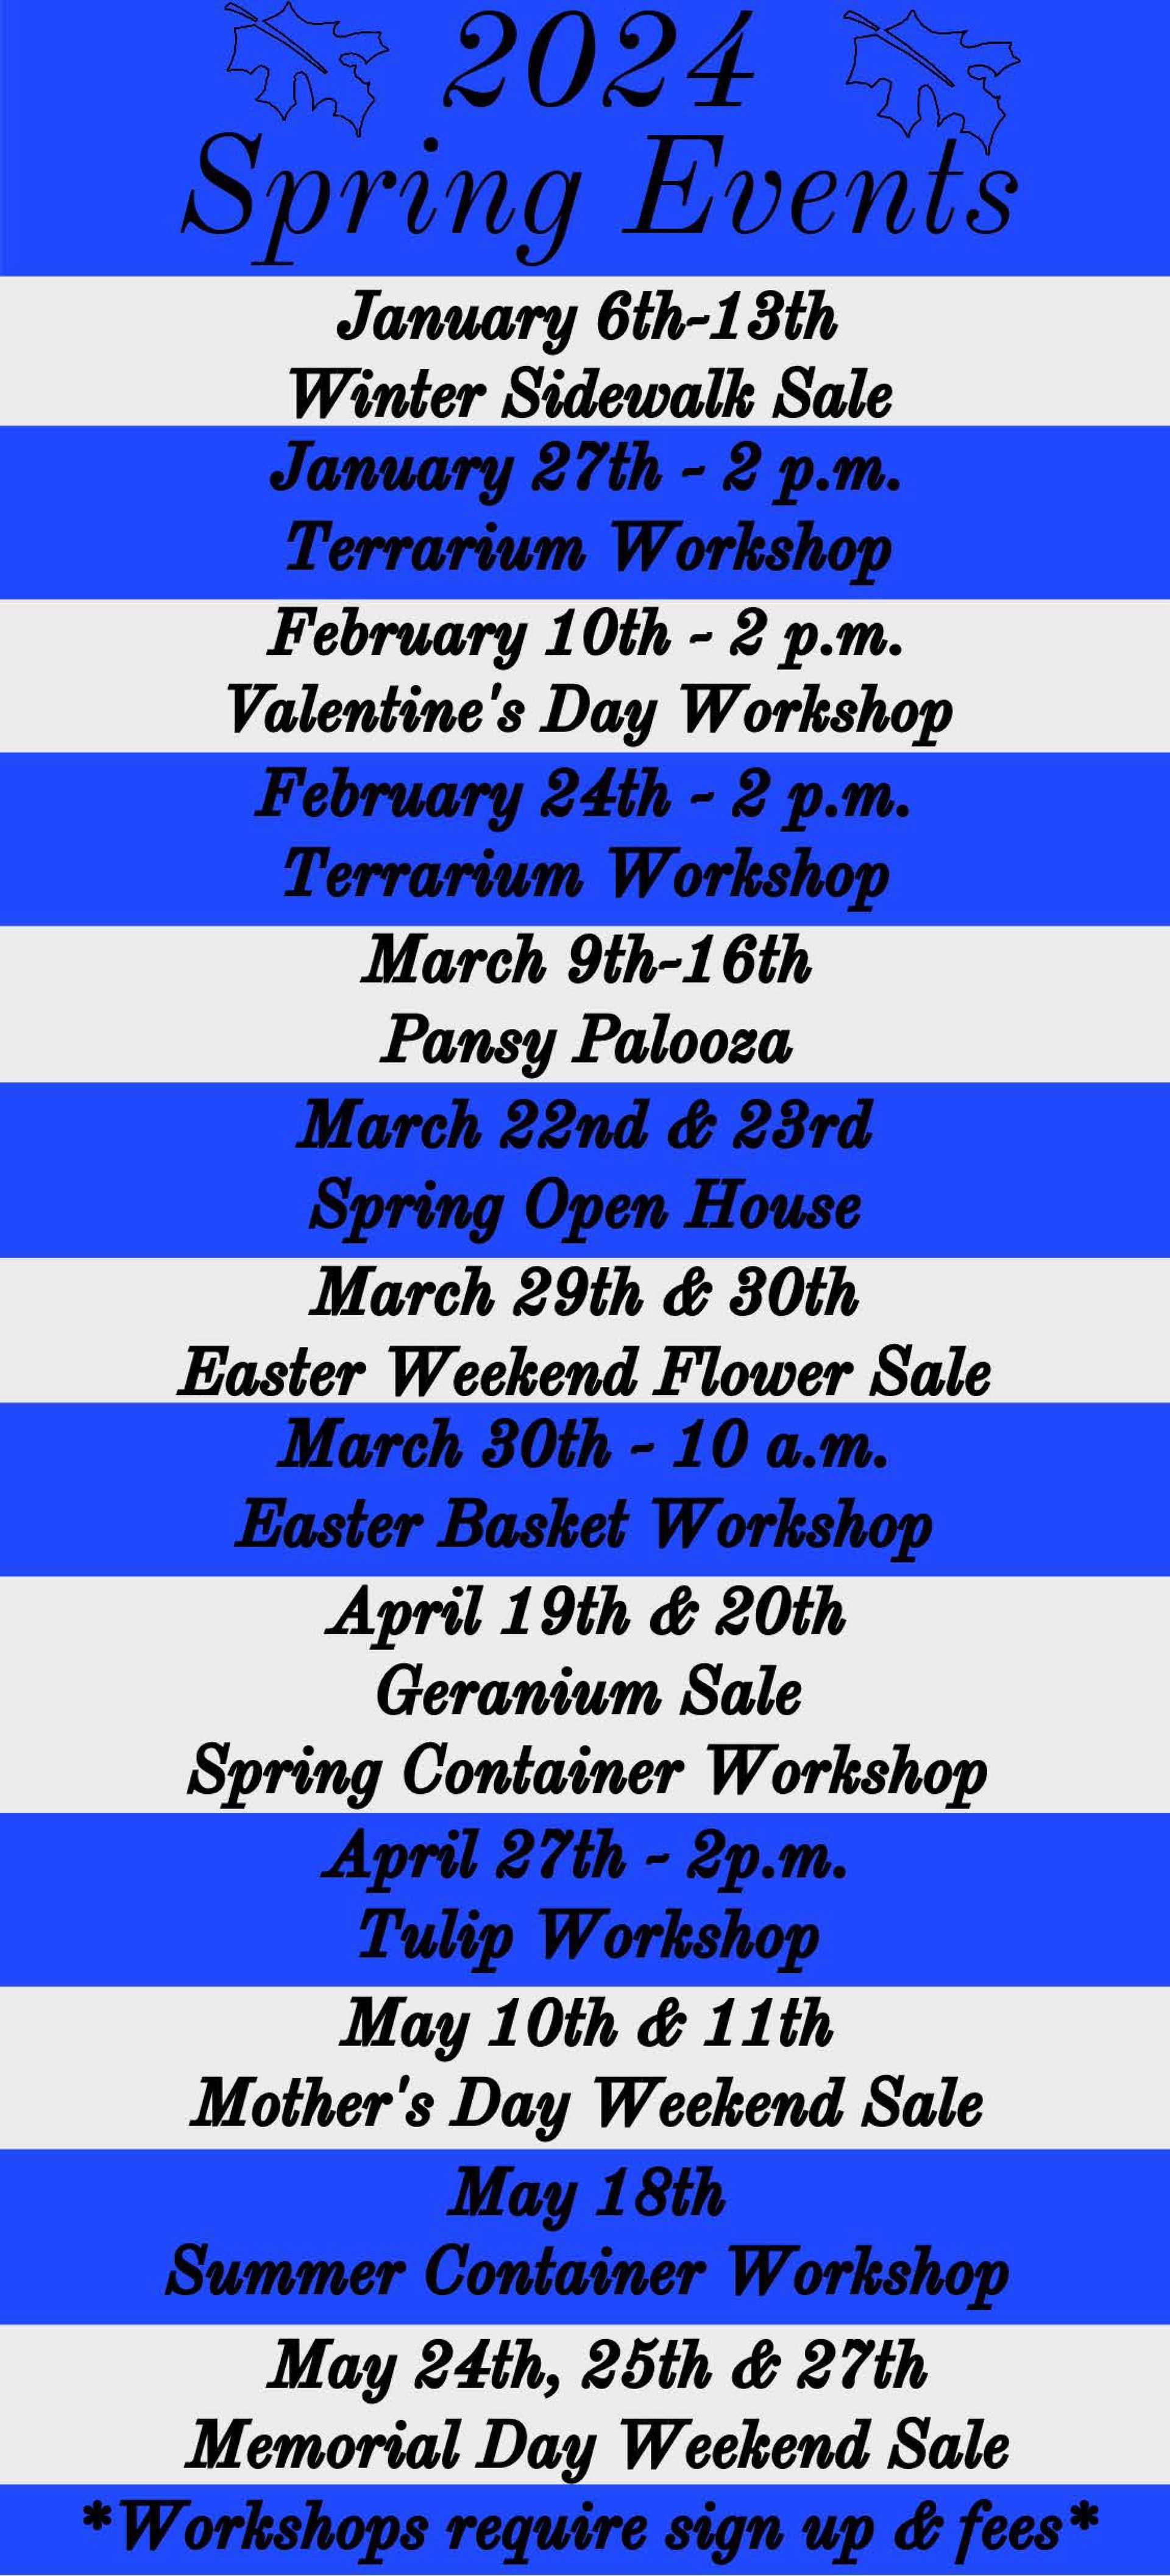 Blueville Nursery Inc 2024 Spring Events